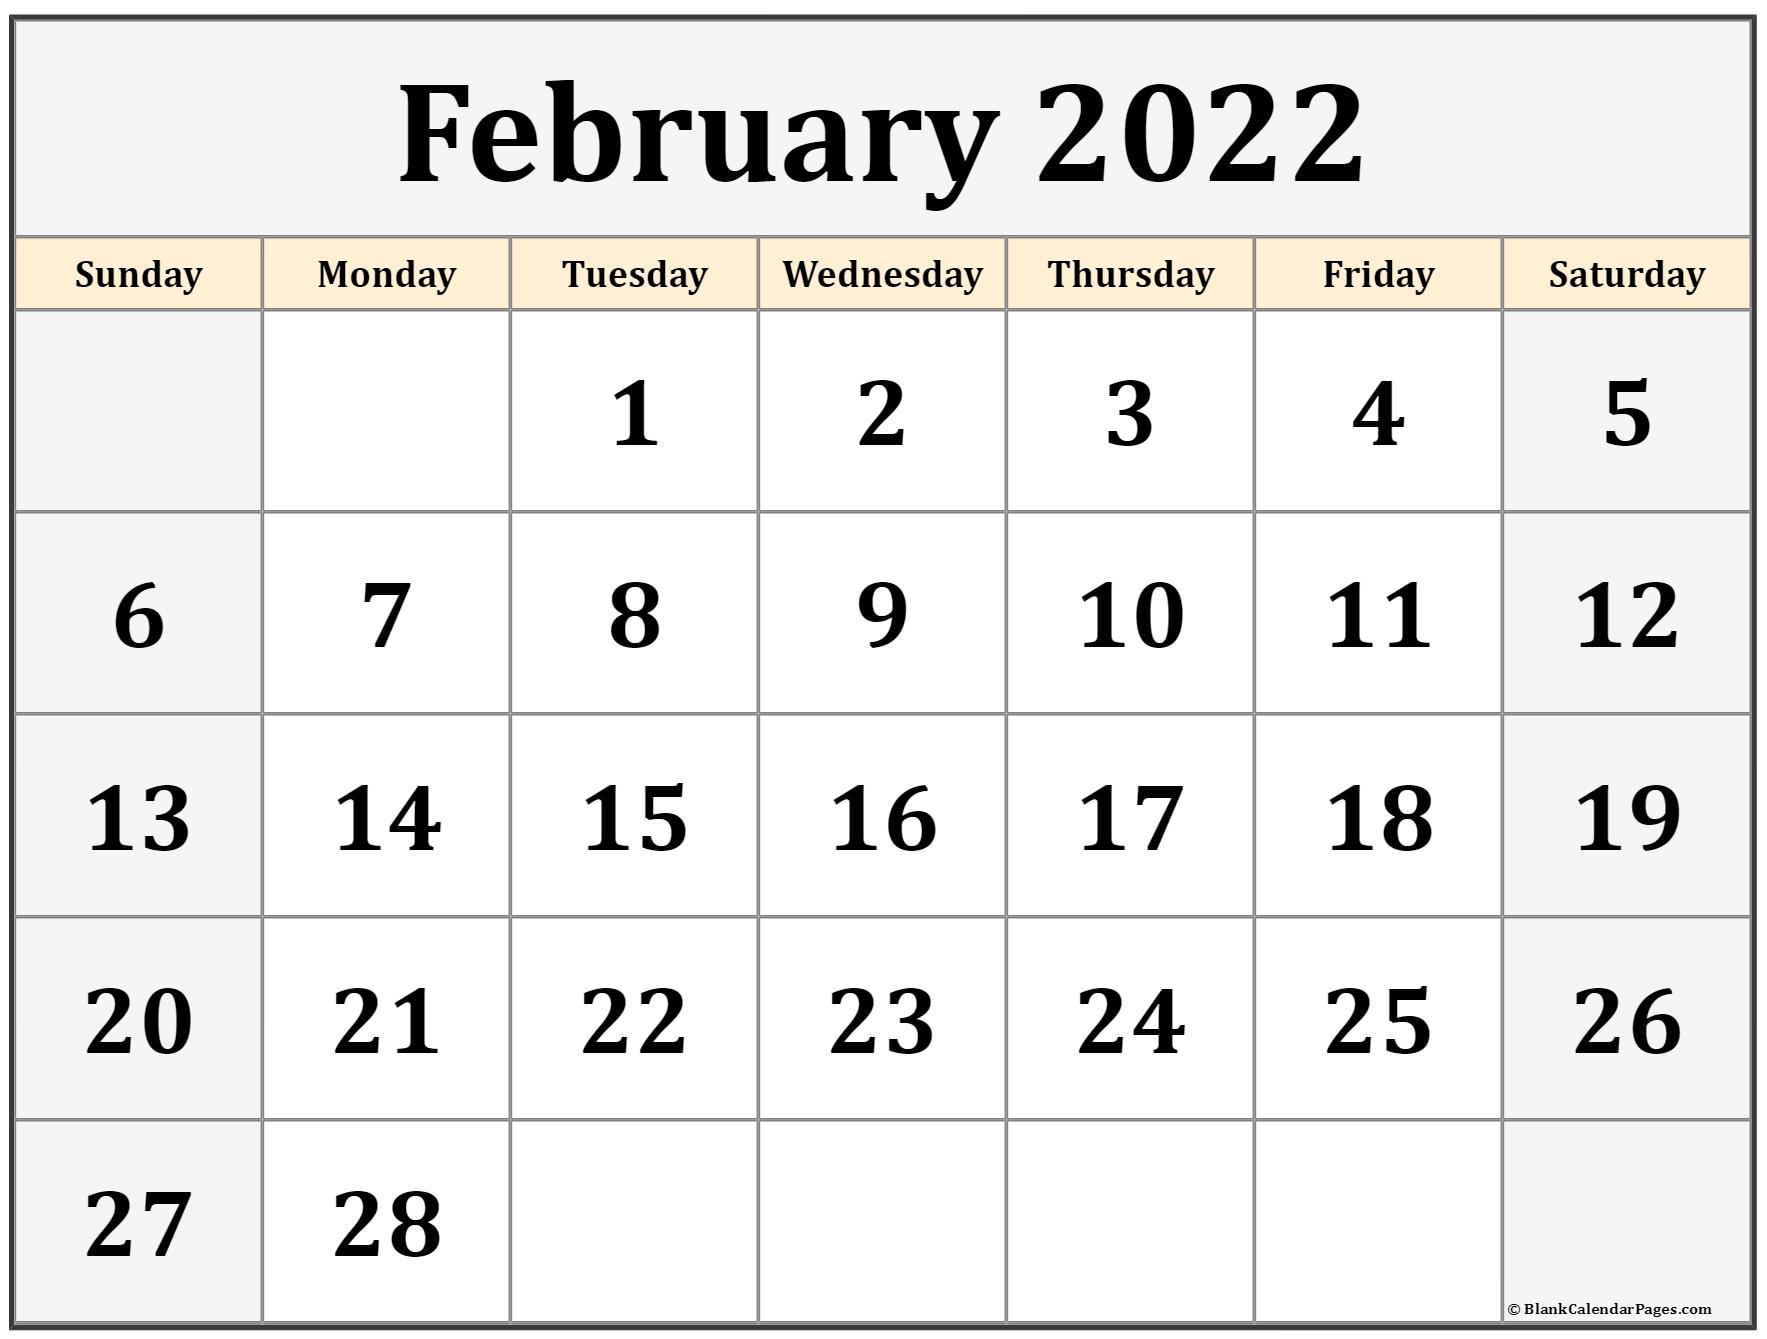 February 2022 calendar | free printable monthly calendars